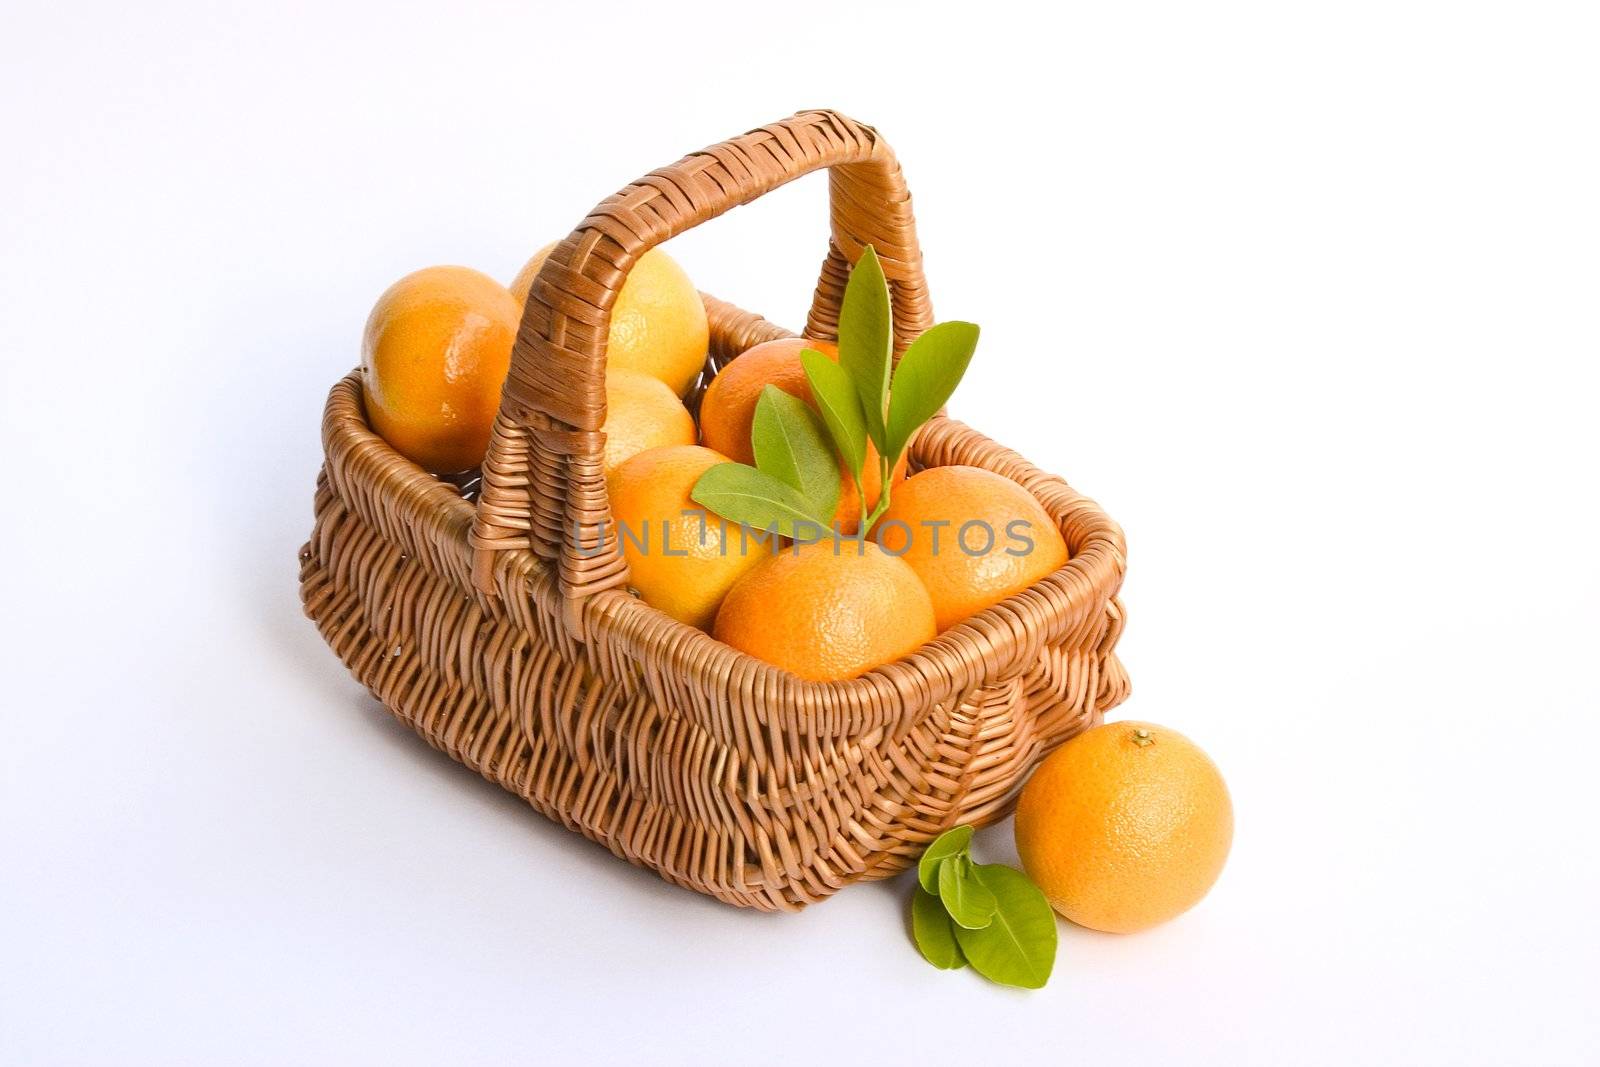 Basket of clementines by miradrozdowski